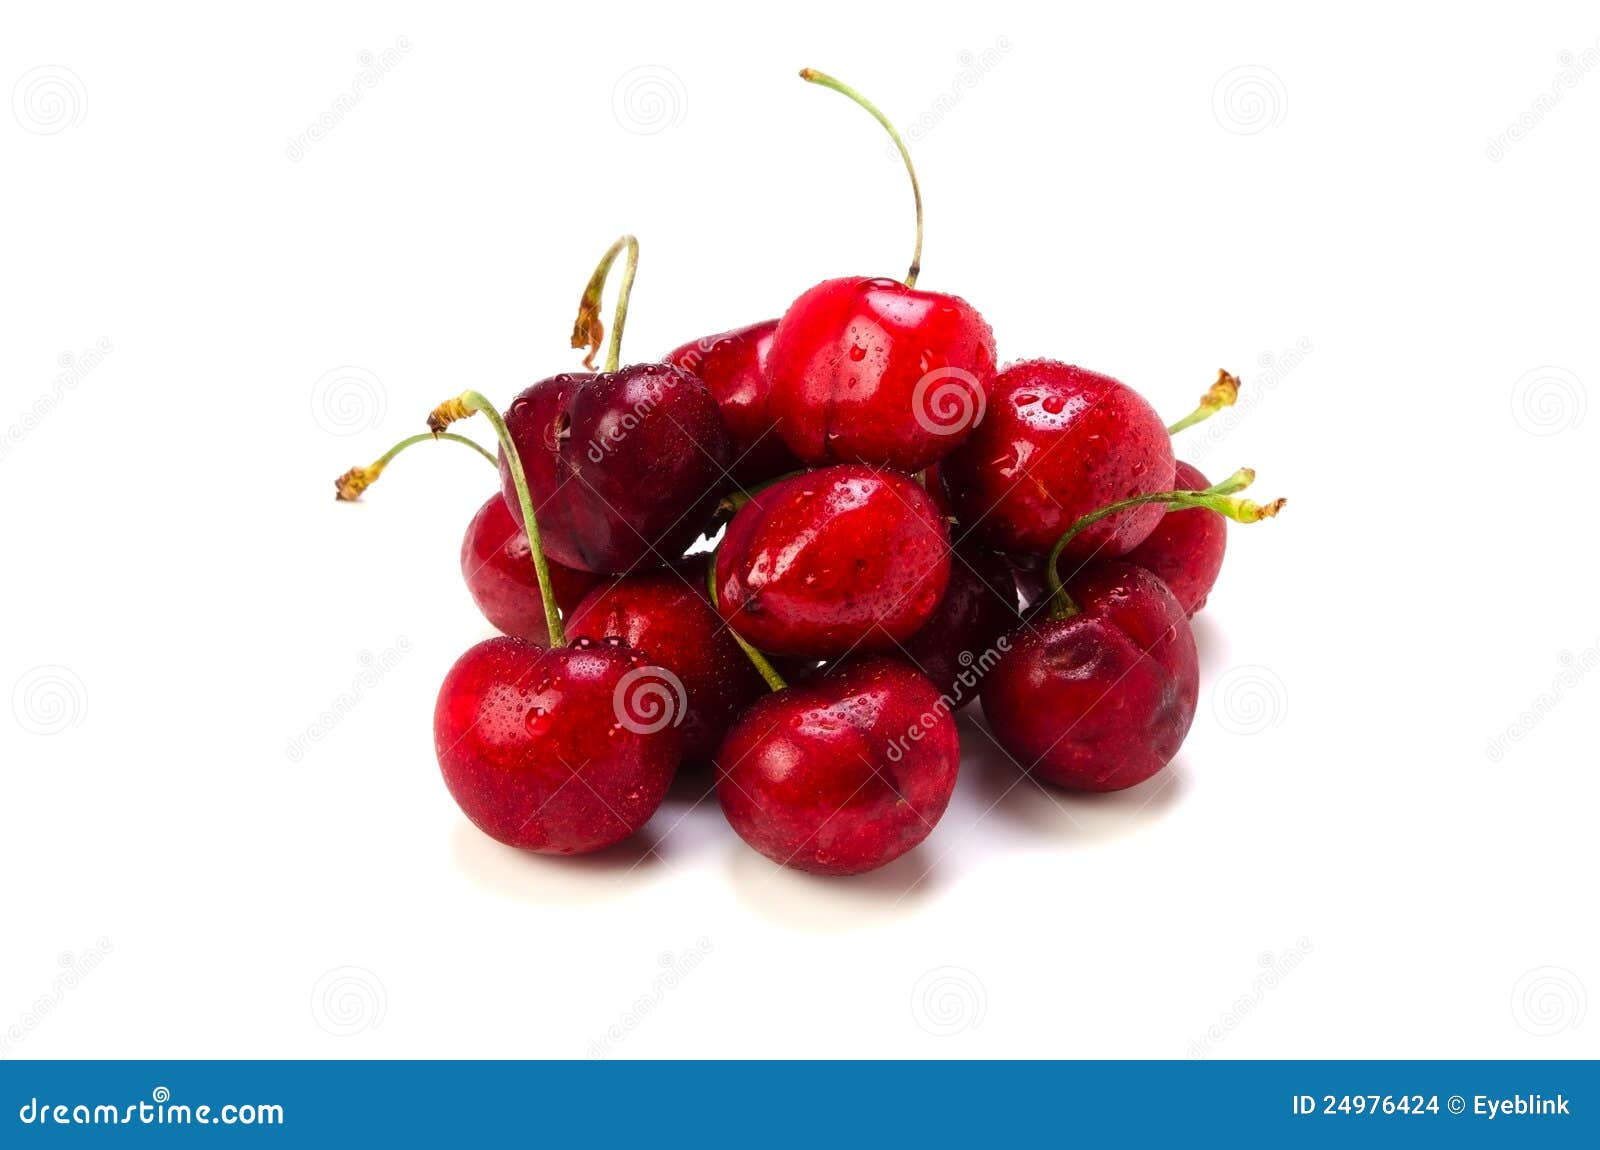 Bing cherry stock photo. Image of fresh, eating, healthy - 24976424